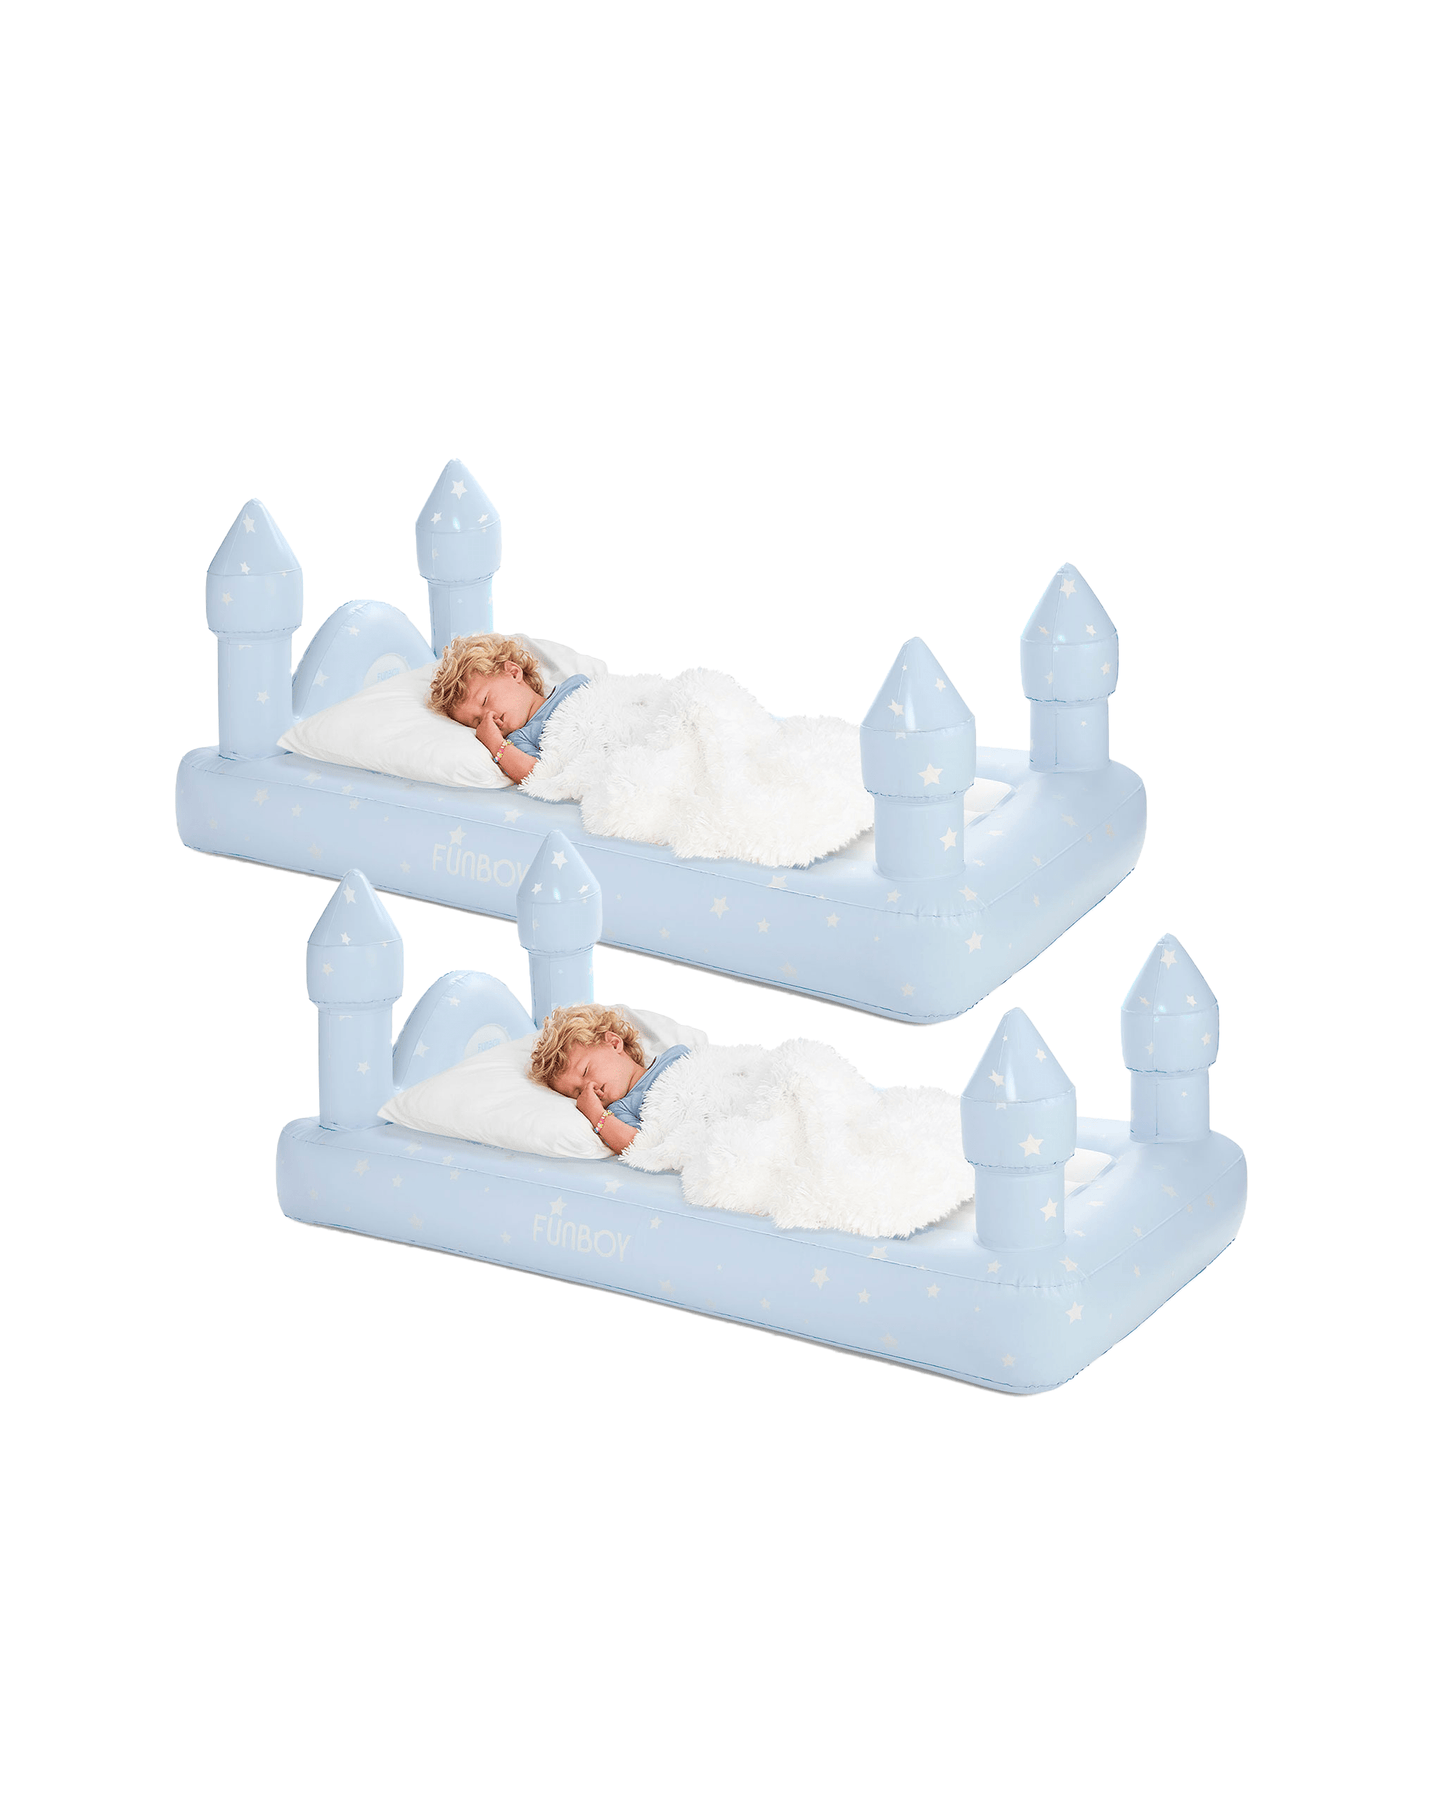 FUNBOY Sleepover Bed - Blue Castle Air Mattress